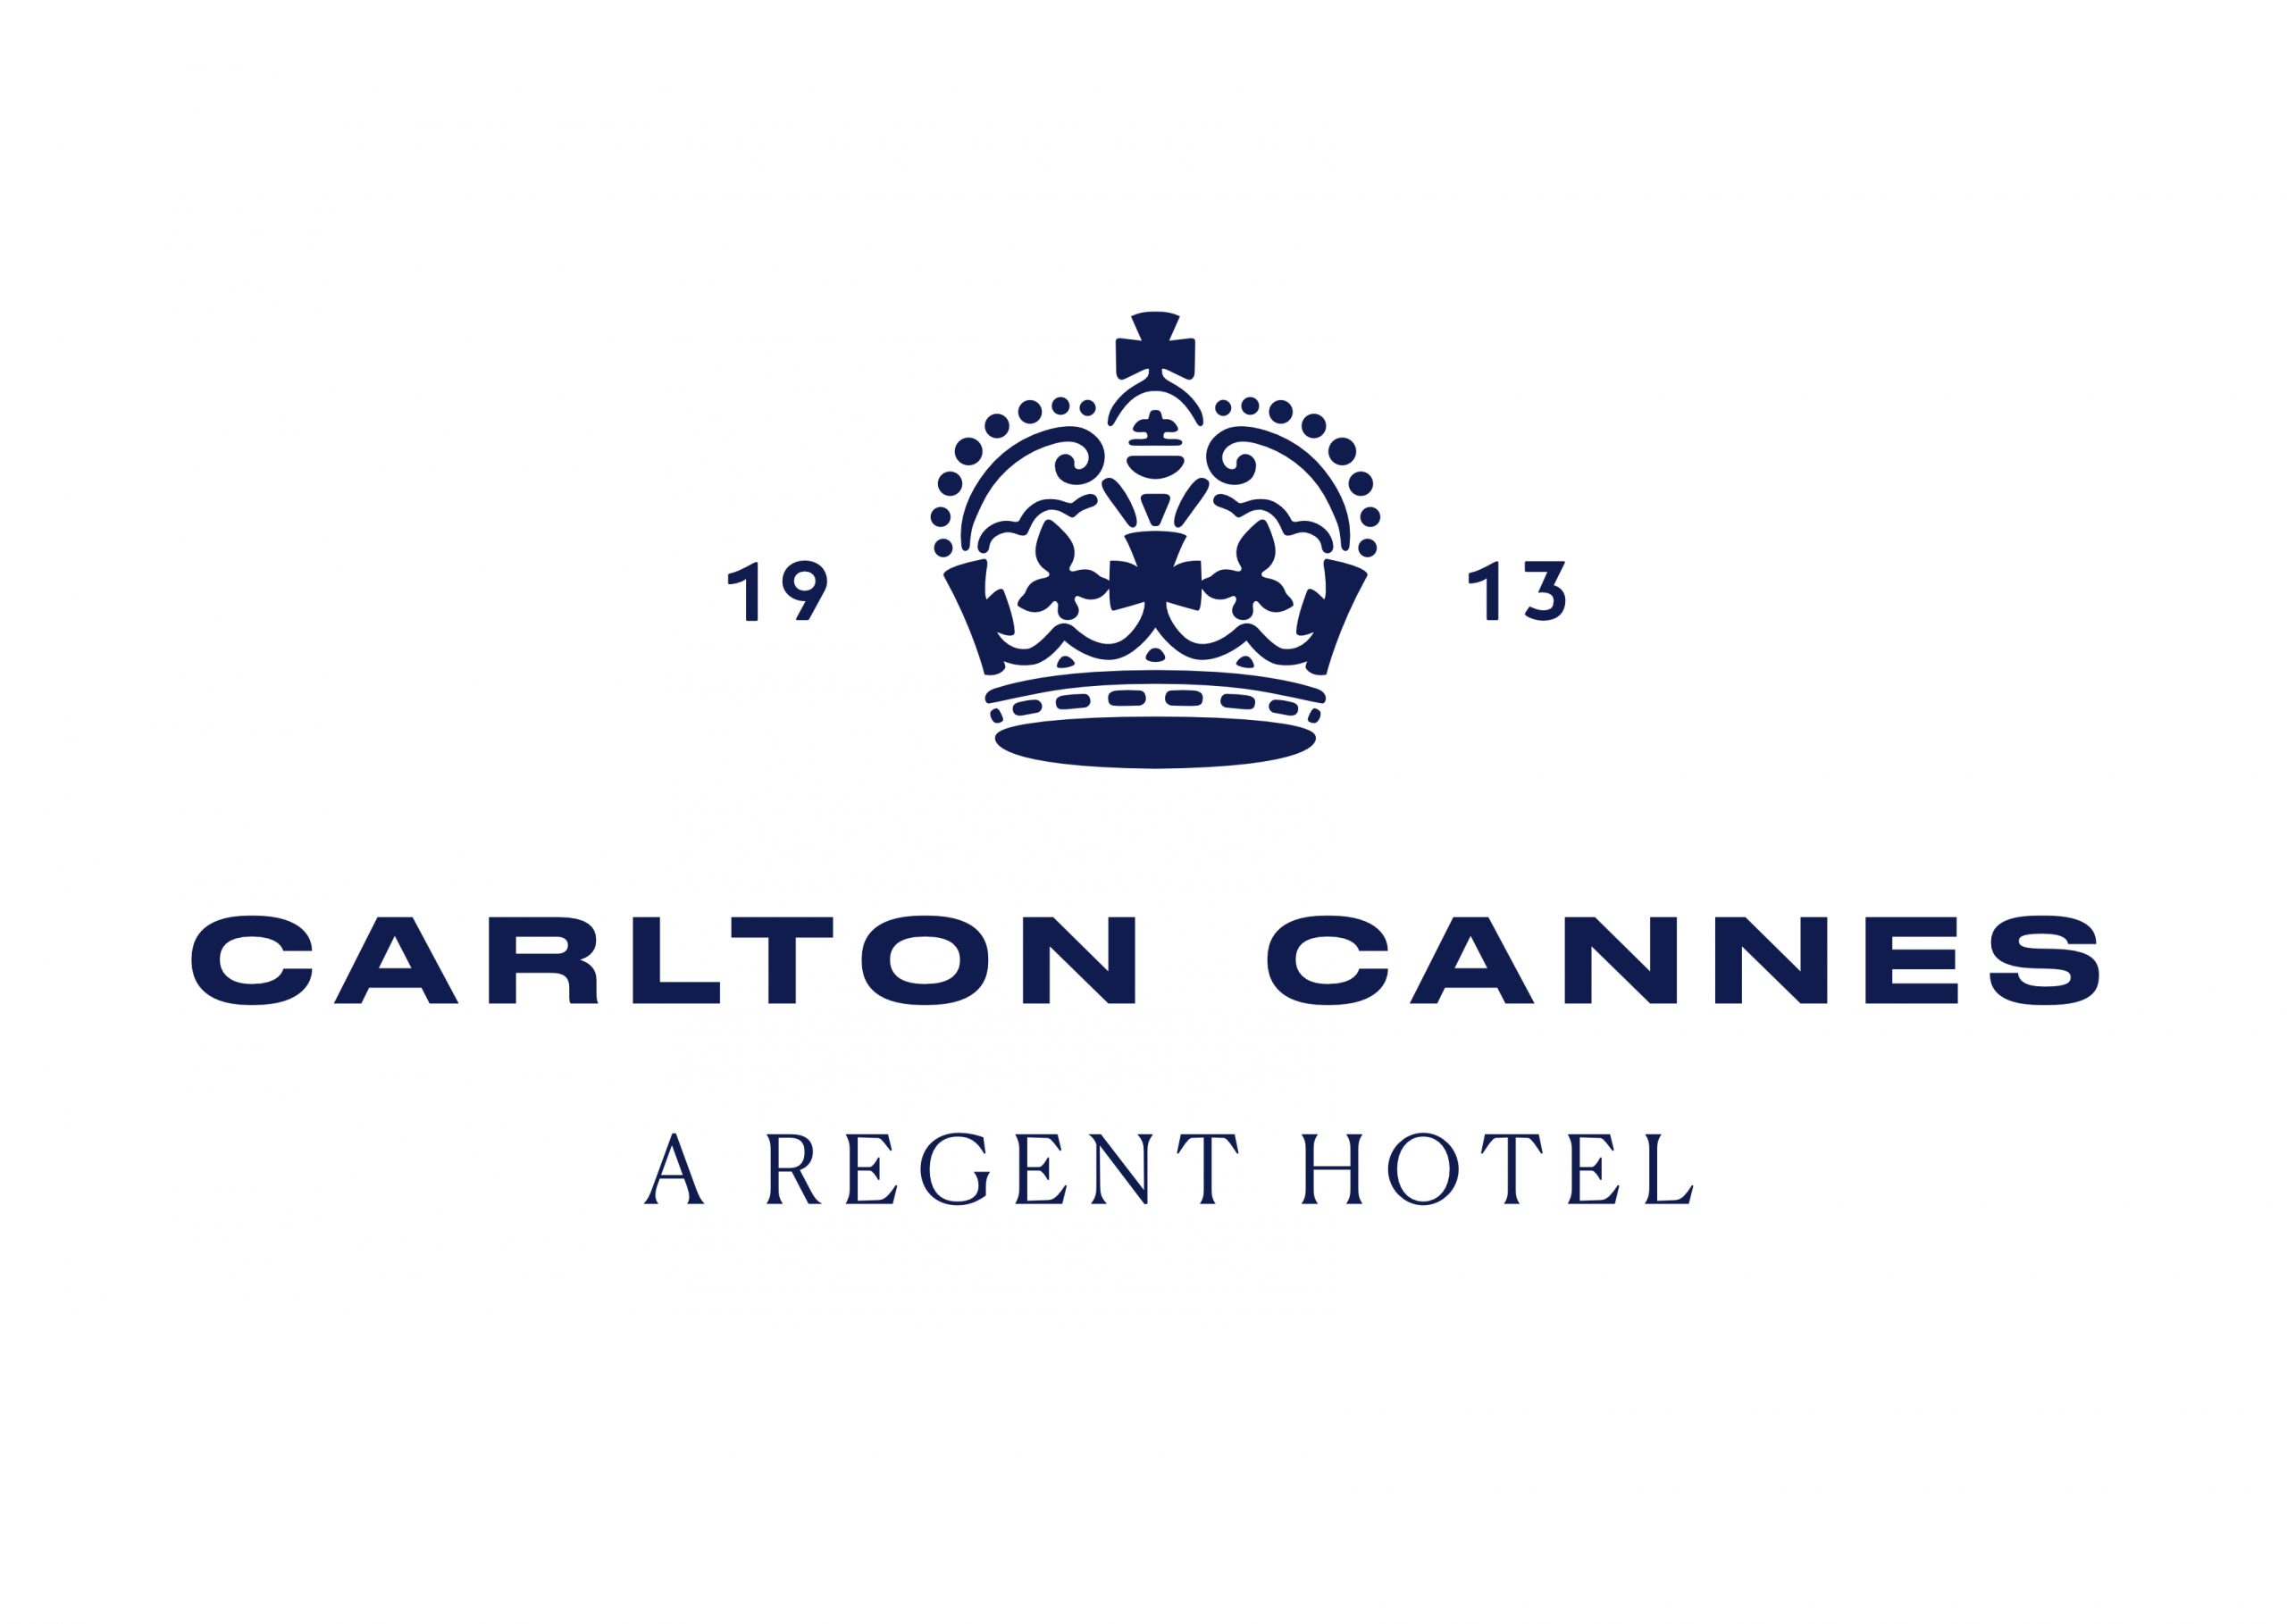 Carlton Cannes, a Regent hotel - Carlton Blue on Whitejpg